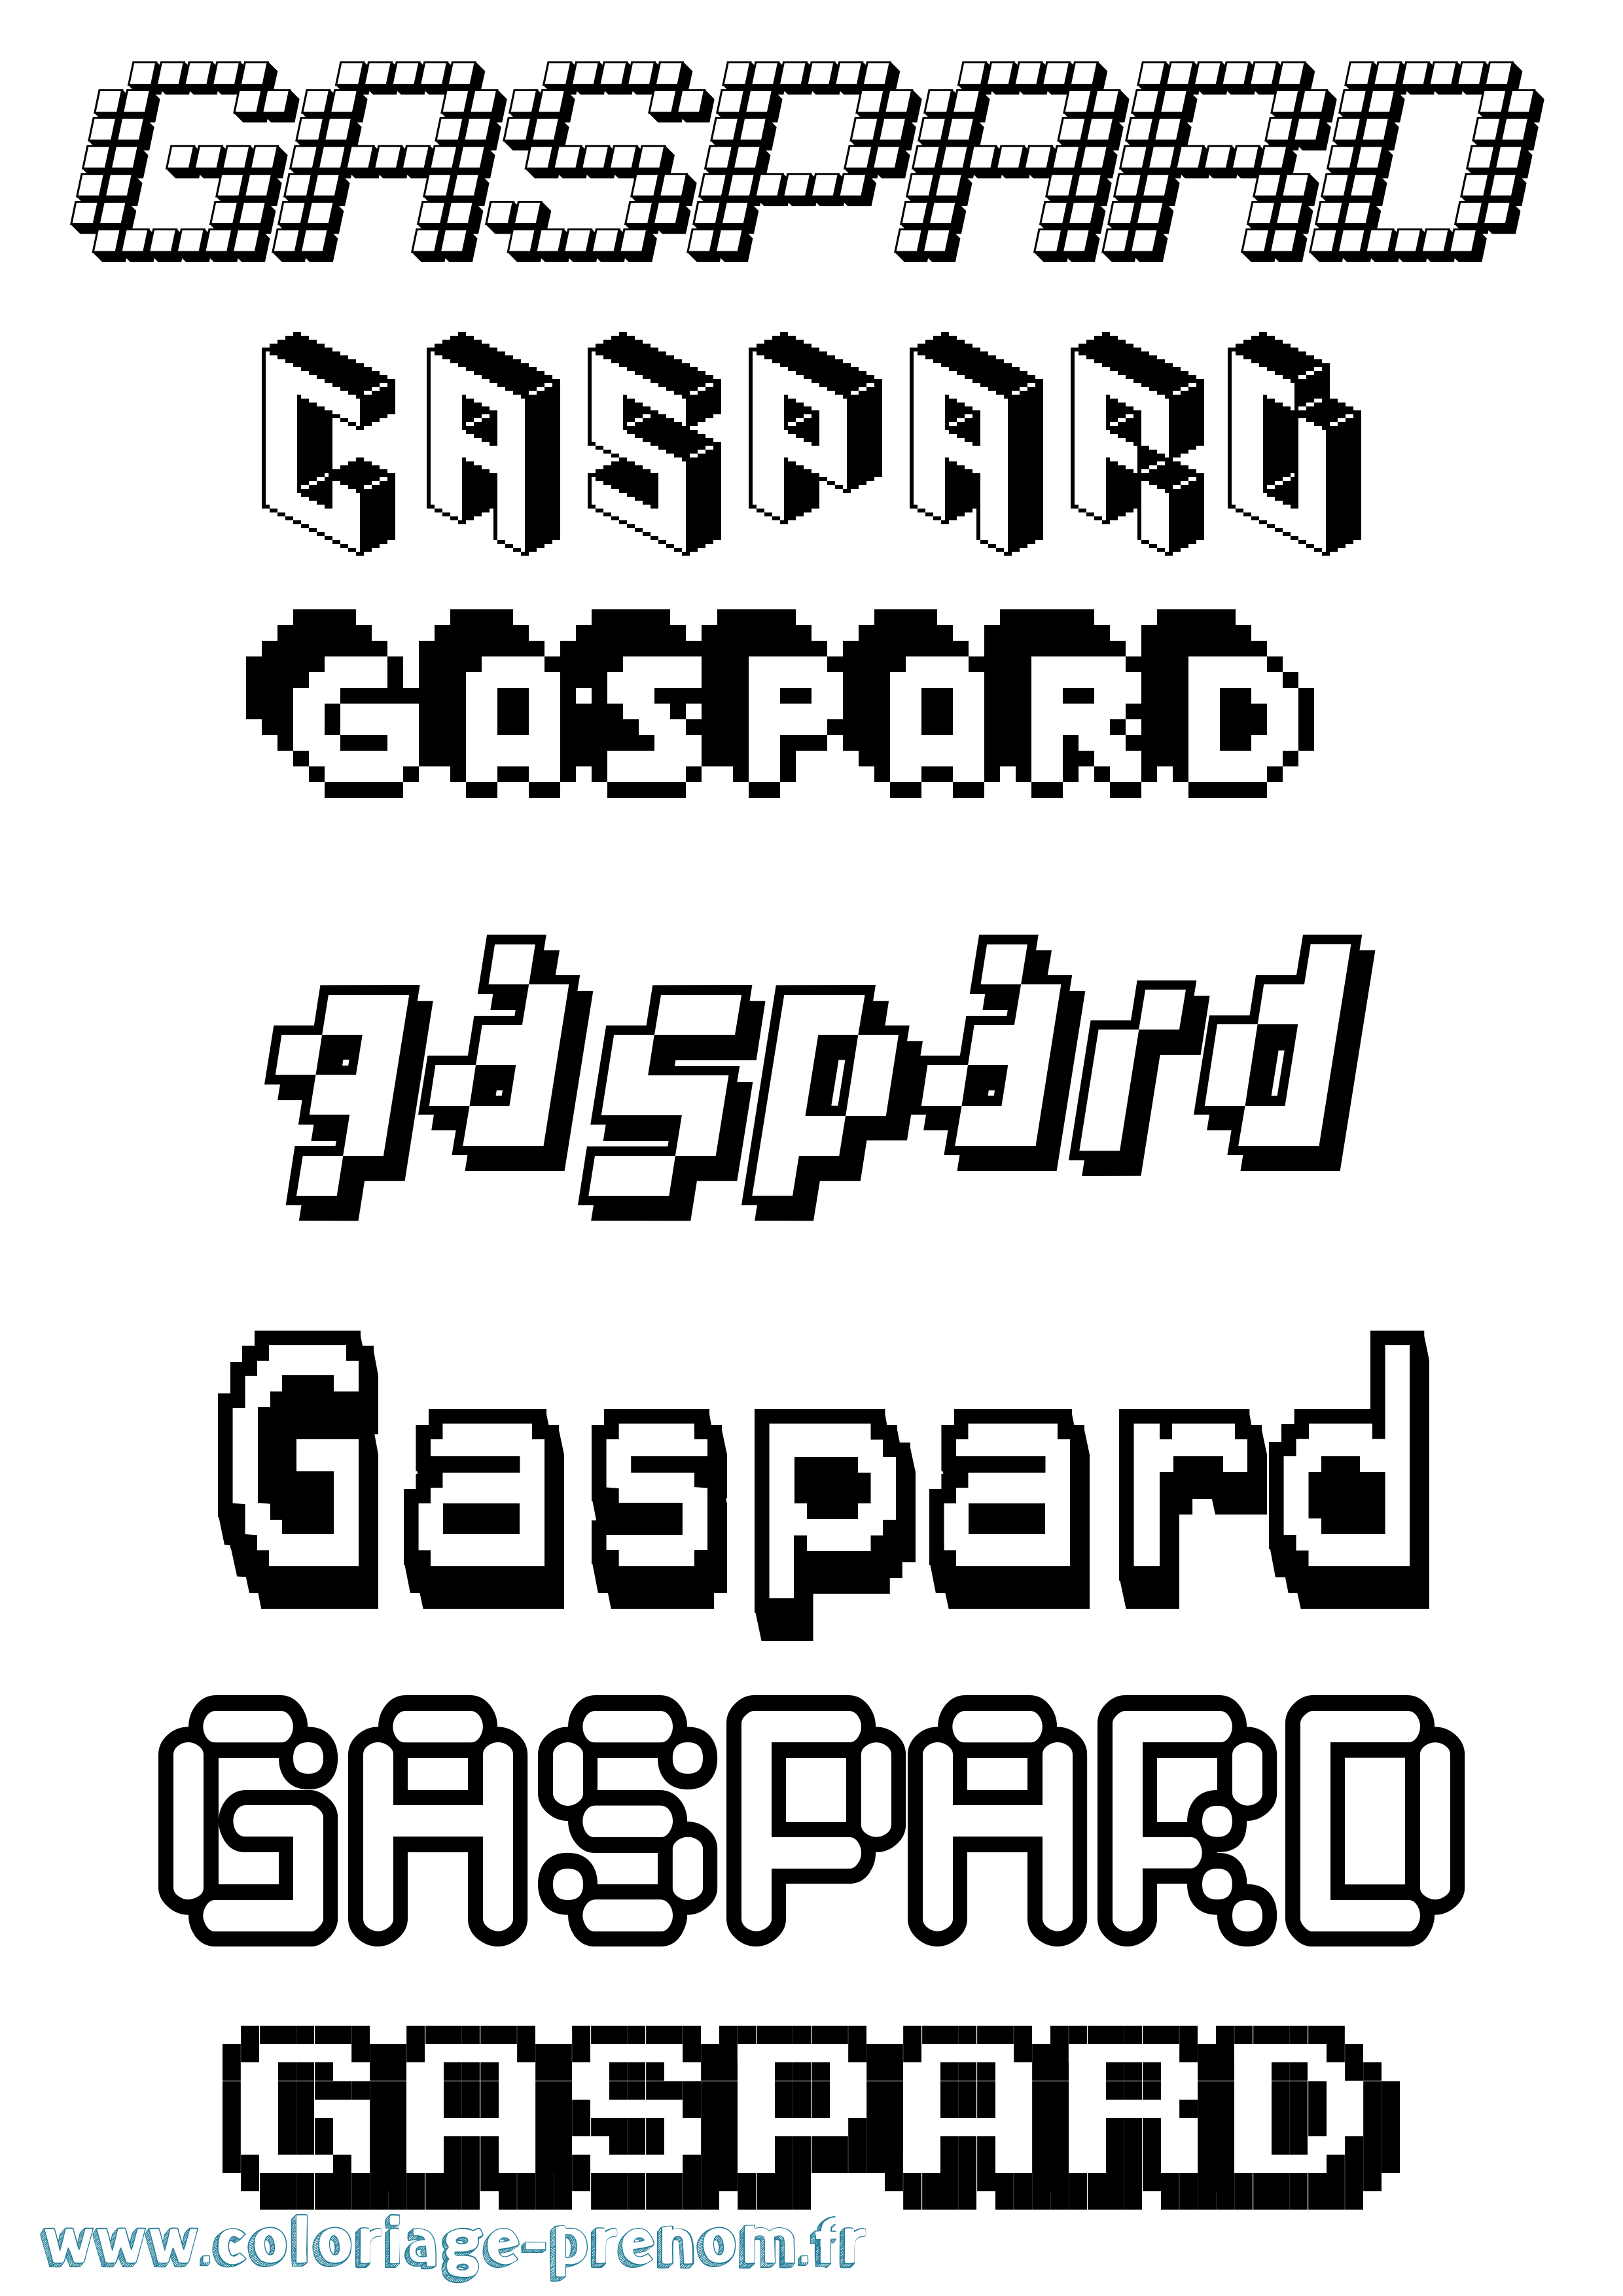 Coloriage prénom Gaspard